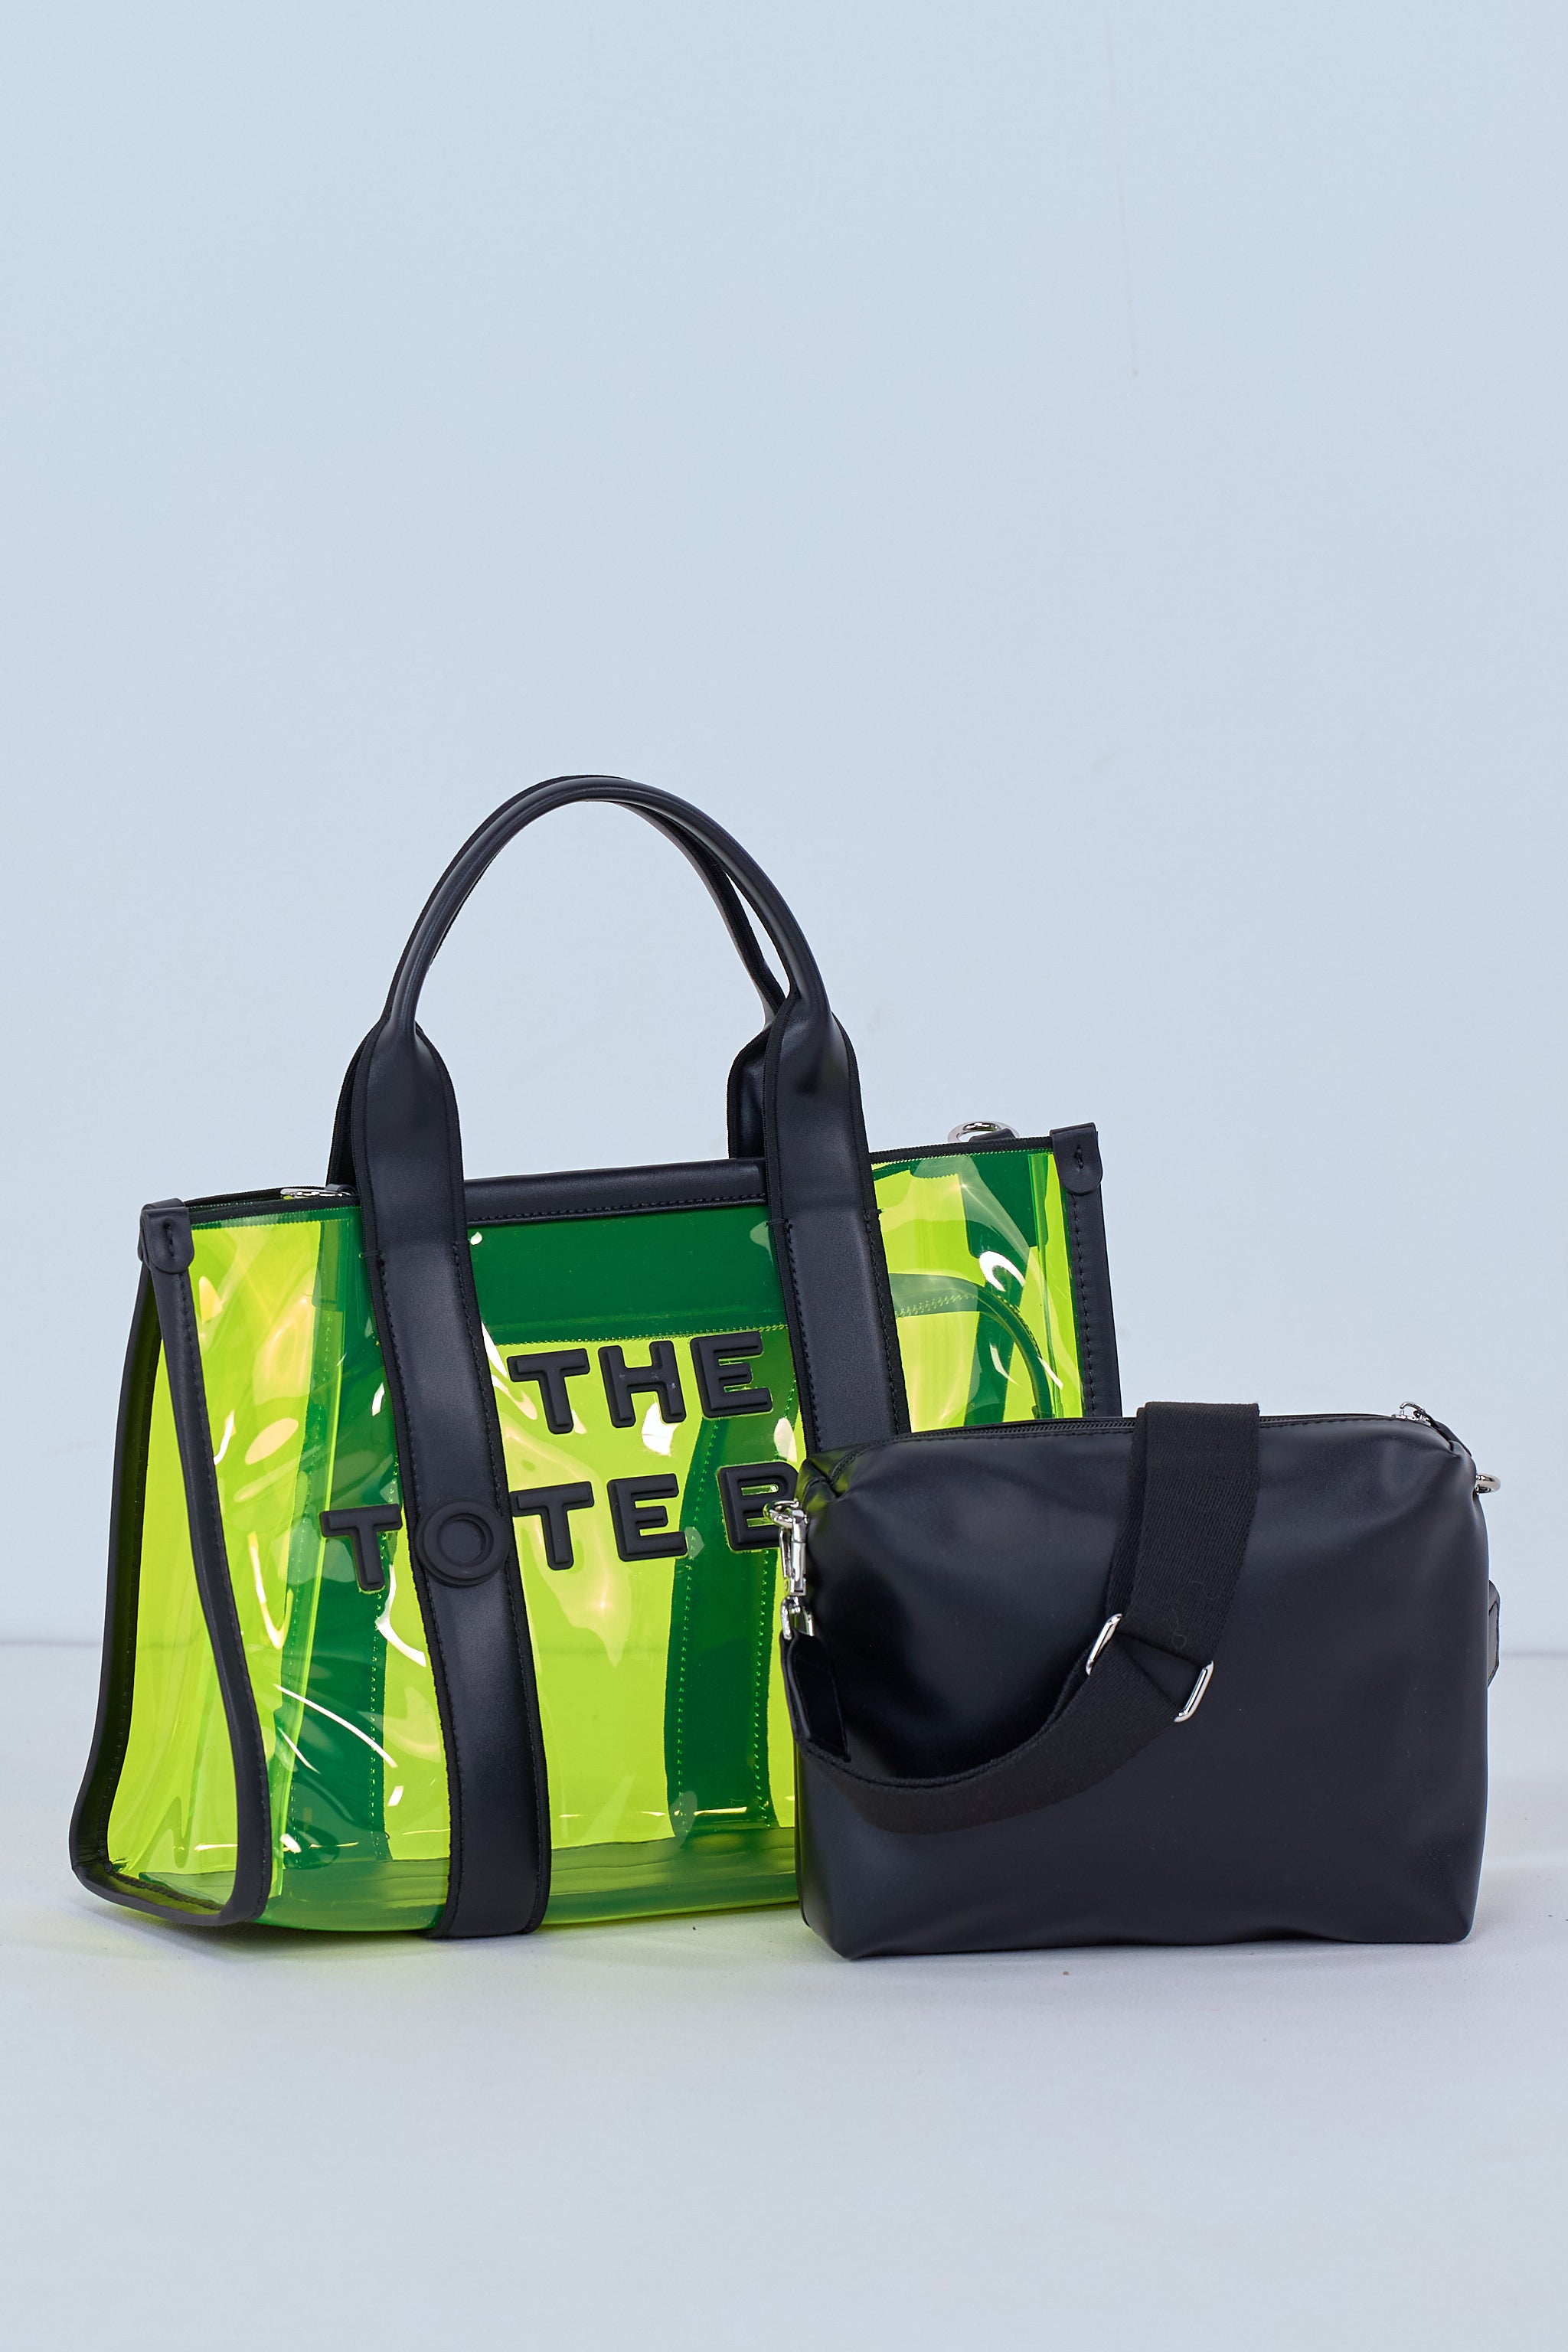 Hochwertige PVC Bag in Bag, grün